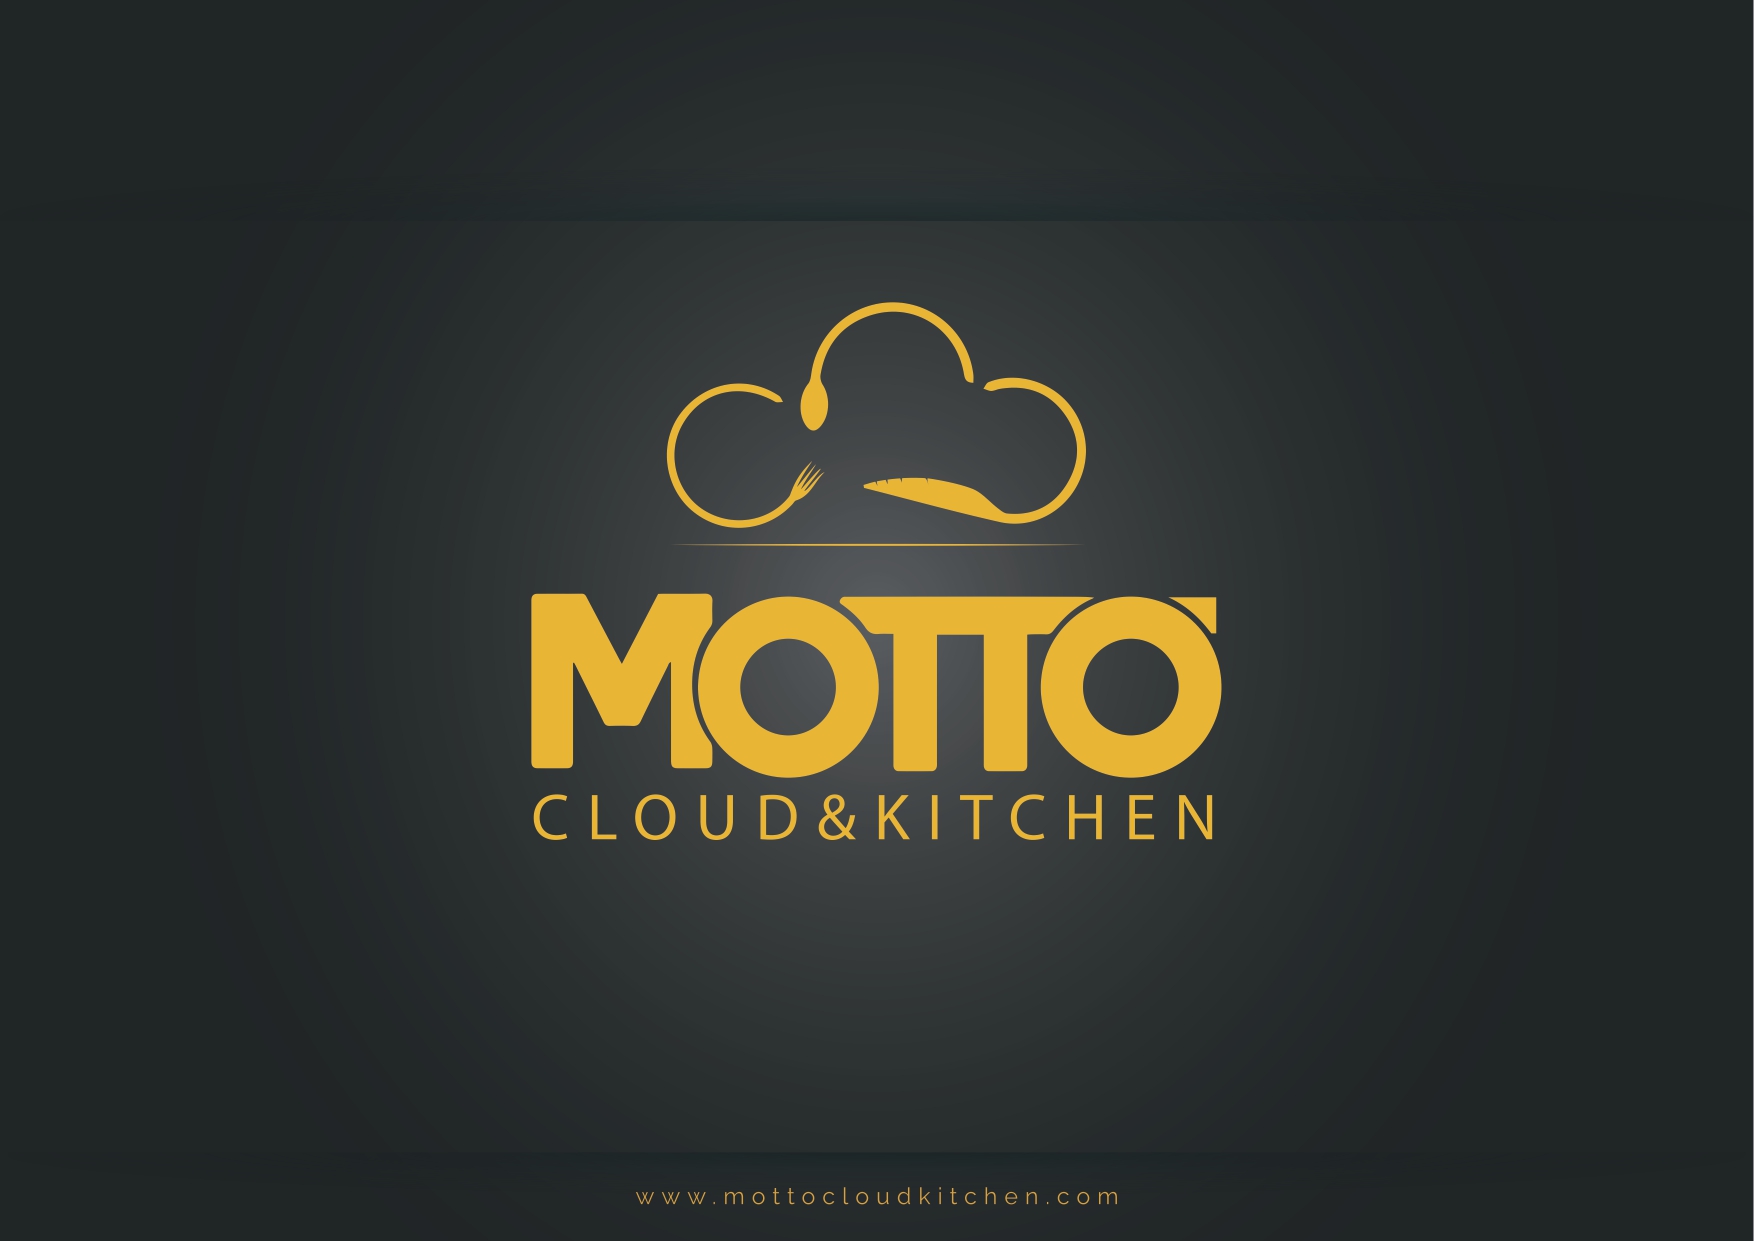 Motto Cloud Kitchen